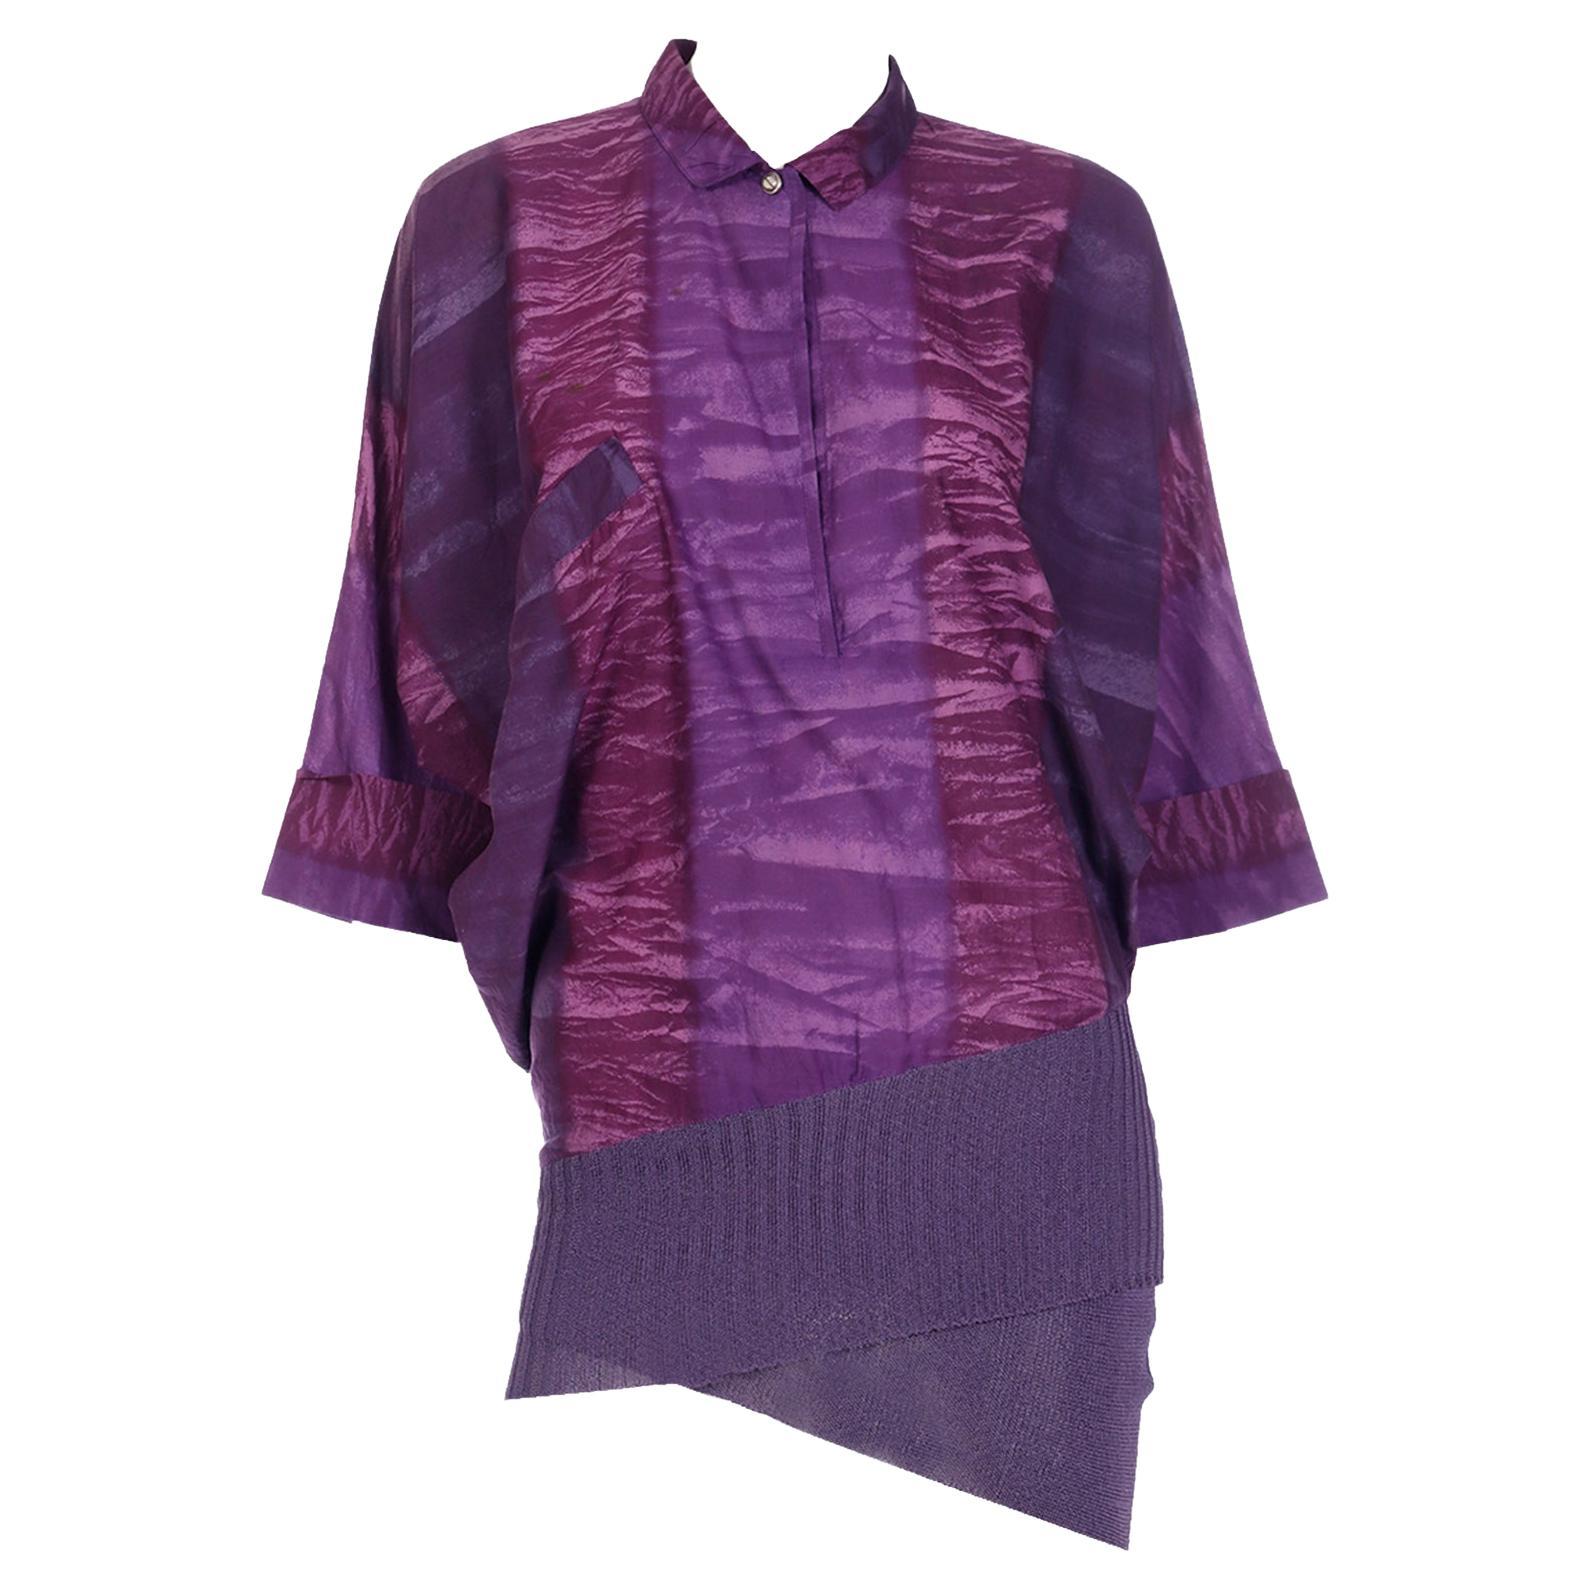 Gianni Versace 1980s Asymmetrical Top Purple Abstract Print Shirt w Knit Trim For Sale